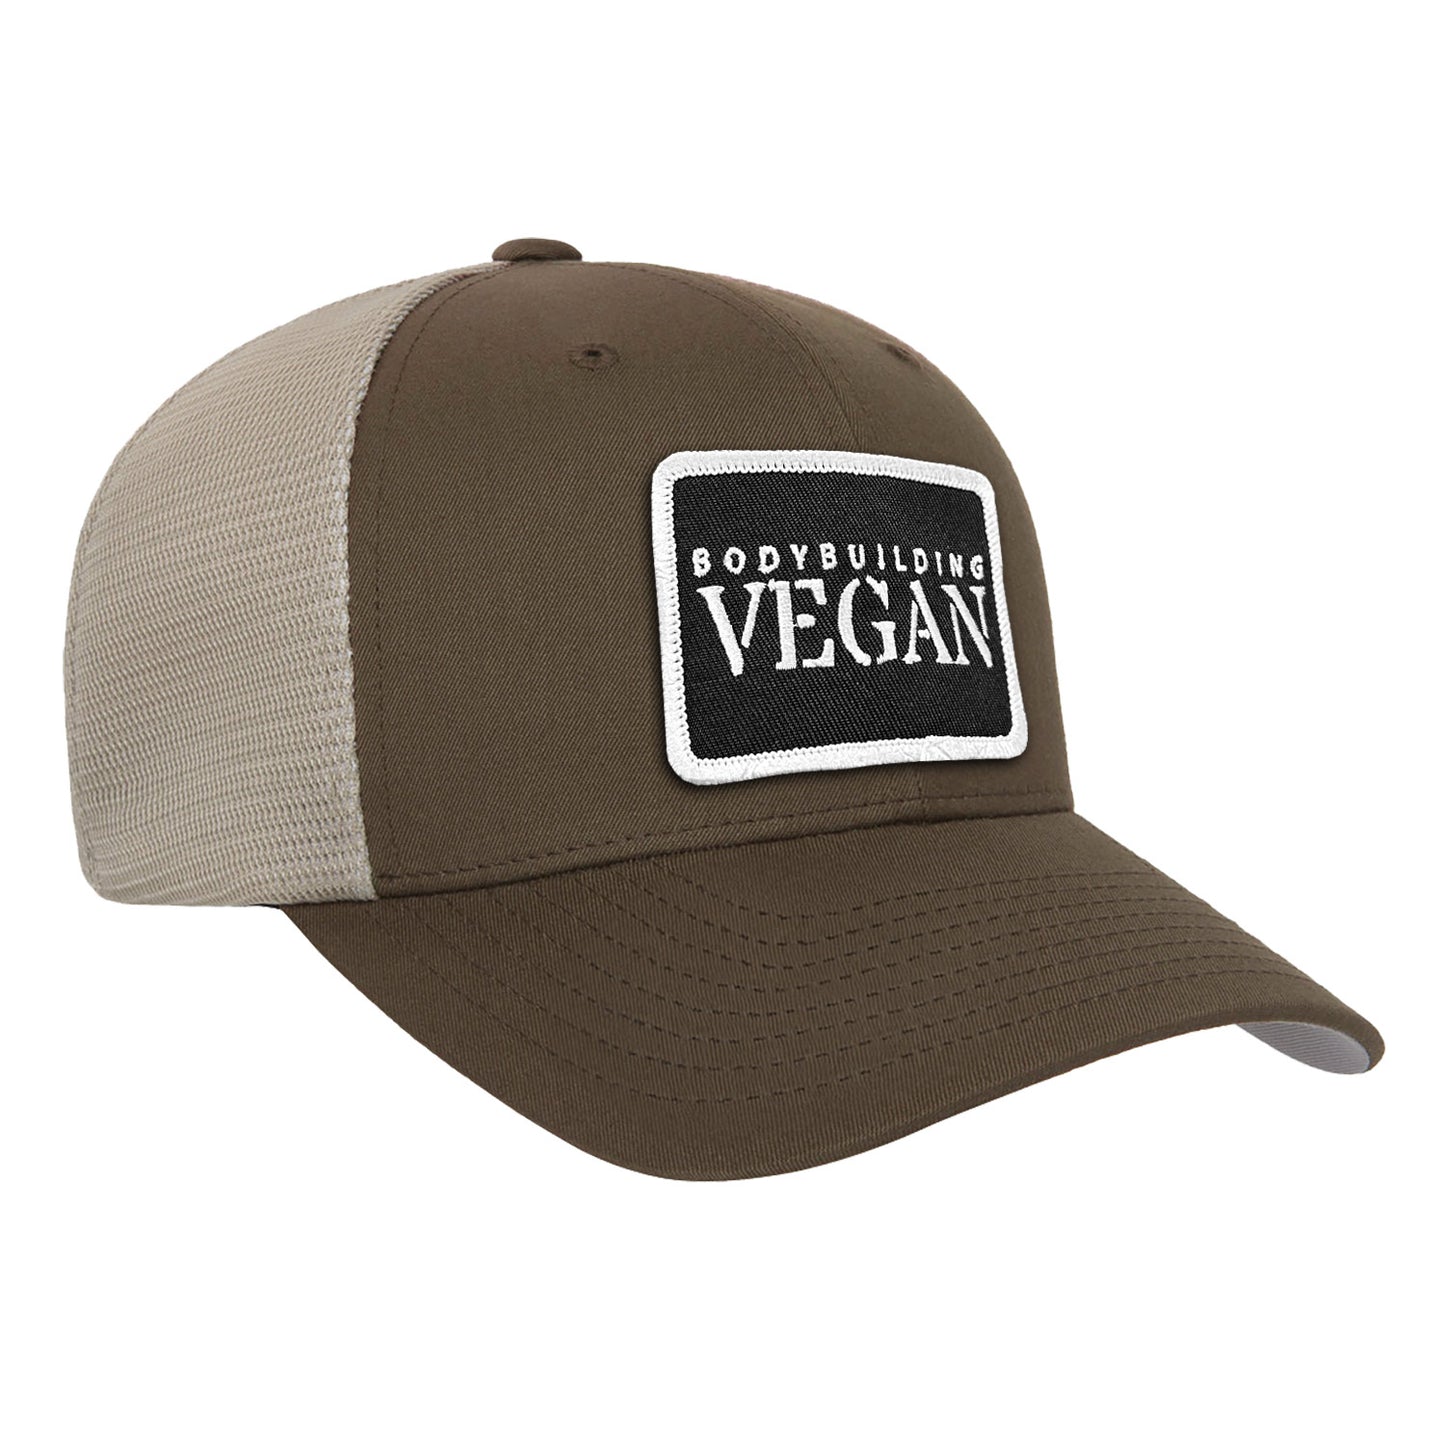 Bodybuilding Vegan Flexifit Snap-Back Mesh Hat - Available in 6 Colors